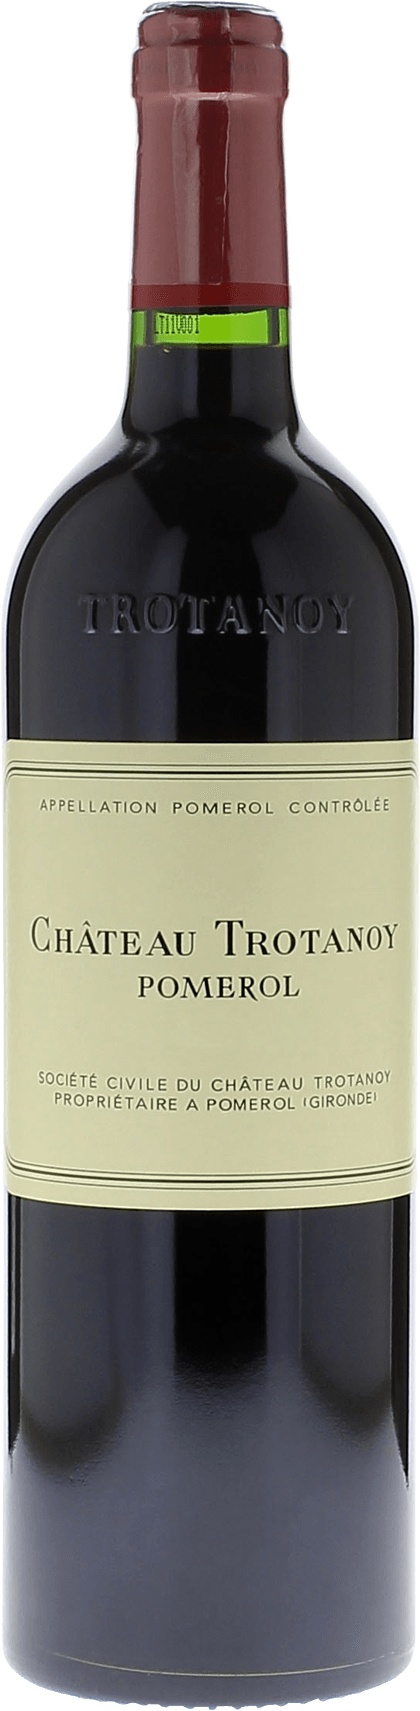 Trotanoy 1995  Pomerol, Bordeaux rouge